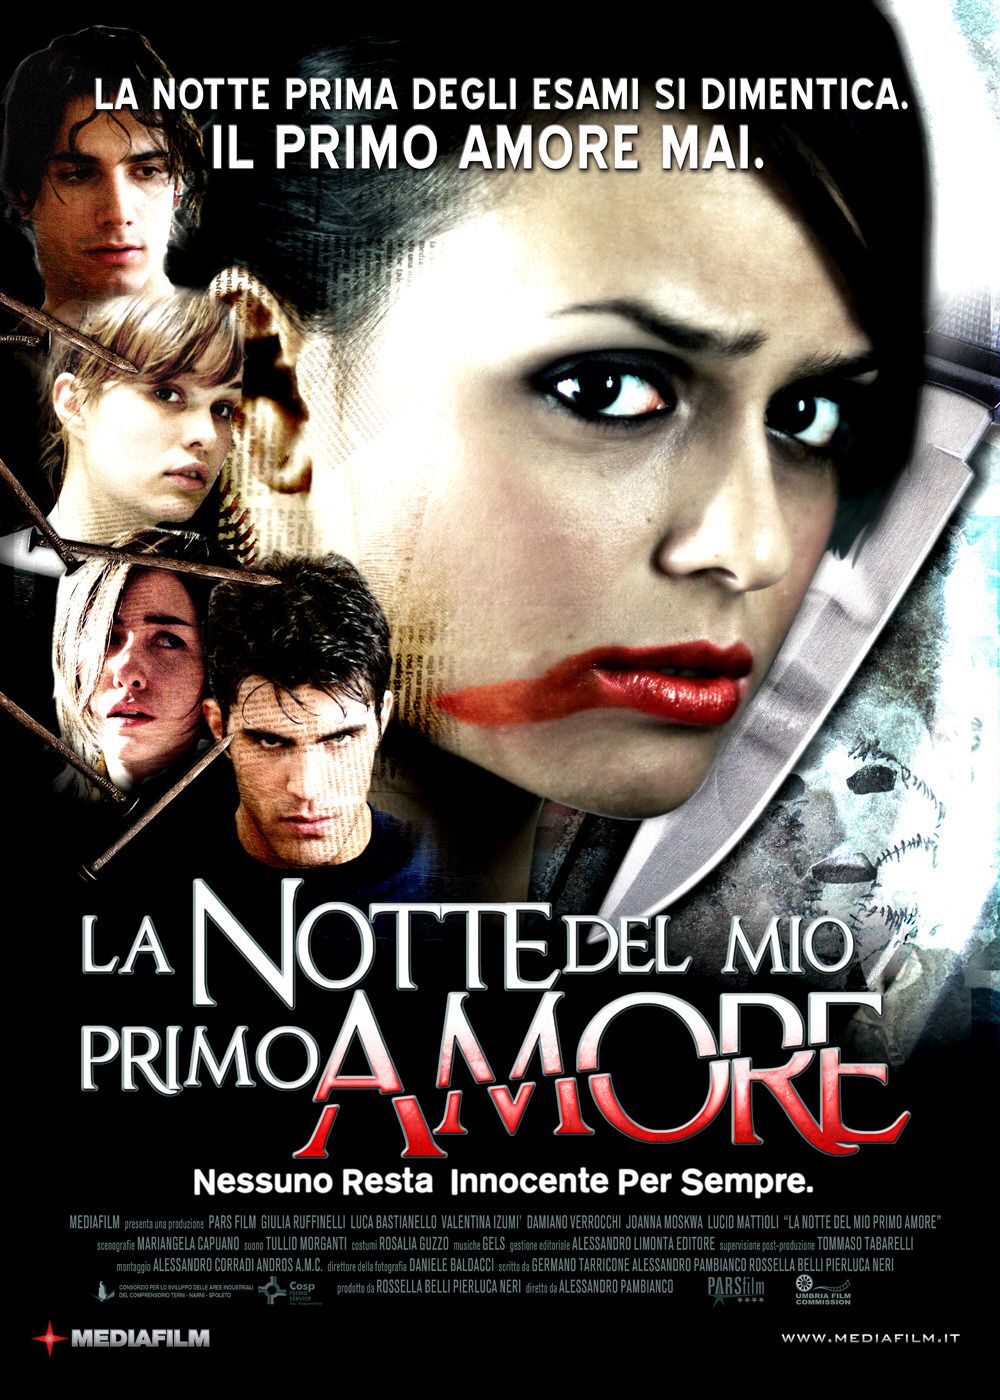 Extra Large Movie Poster Image for Notte del mio primo amore, La 